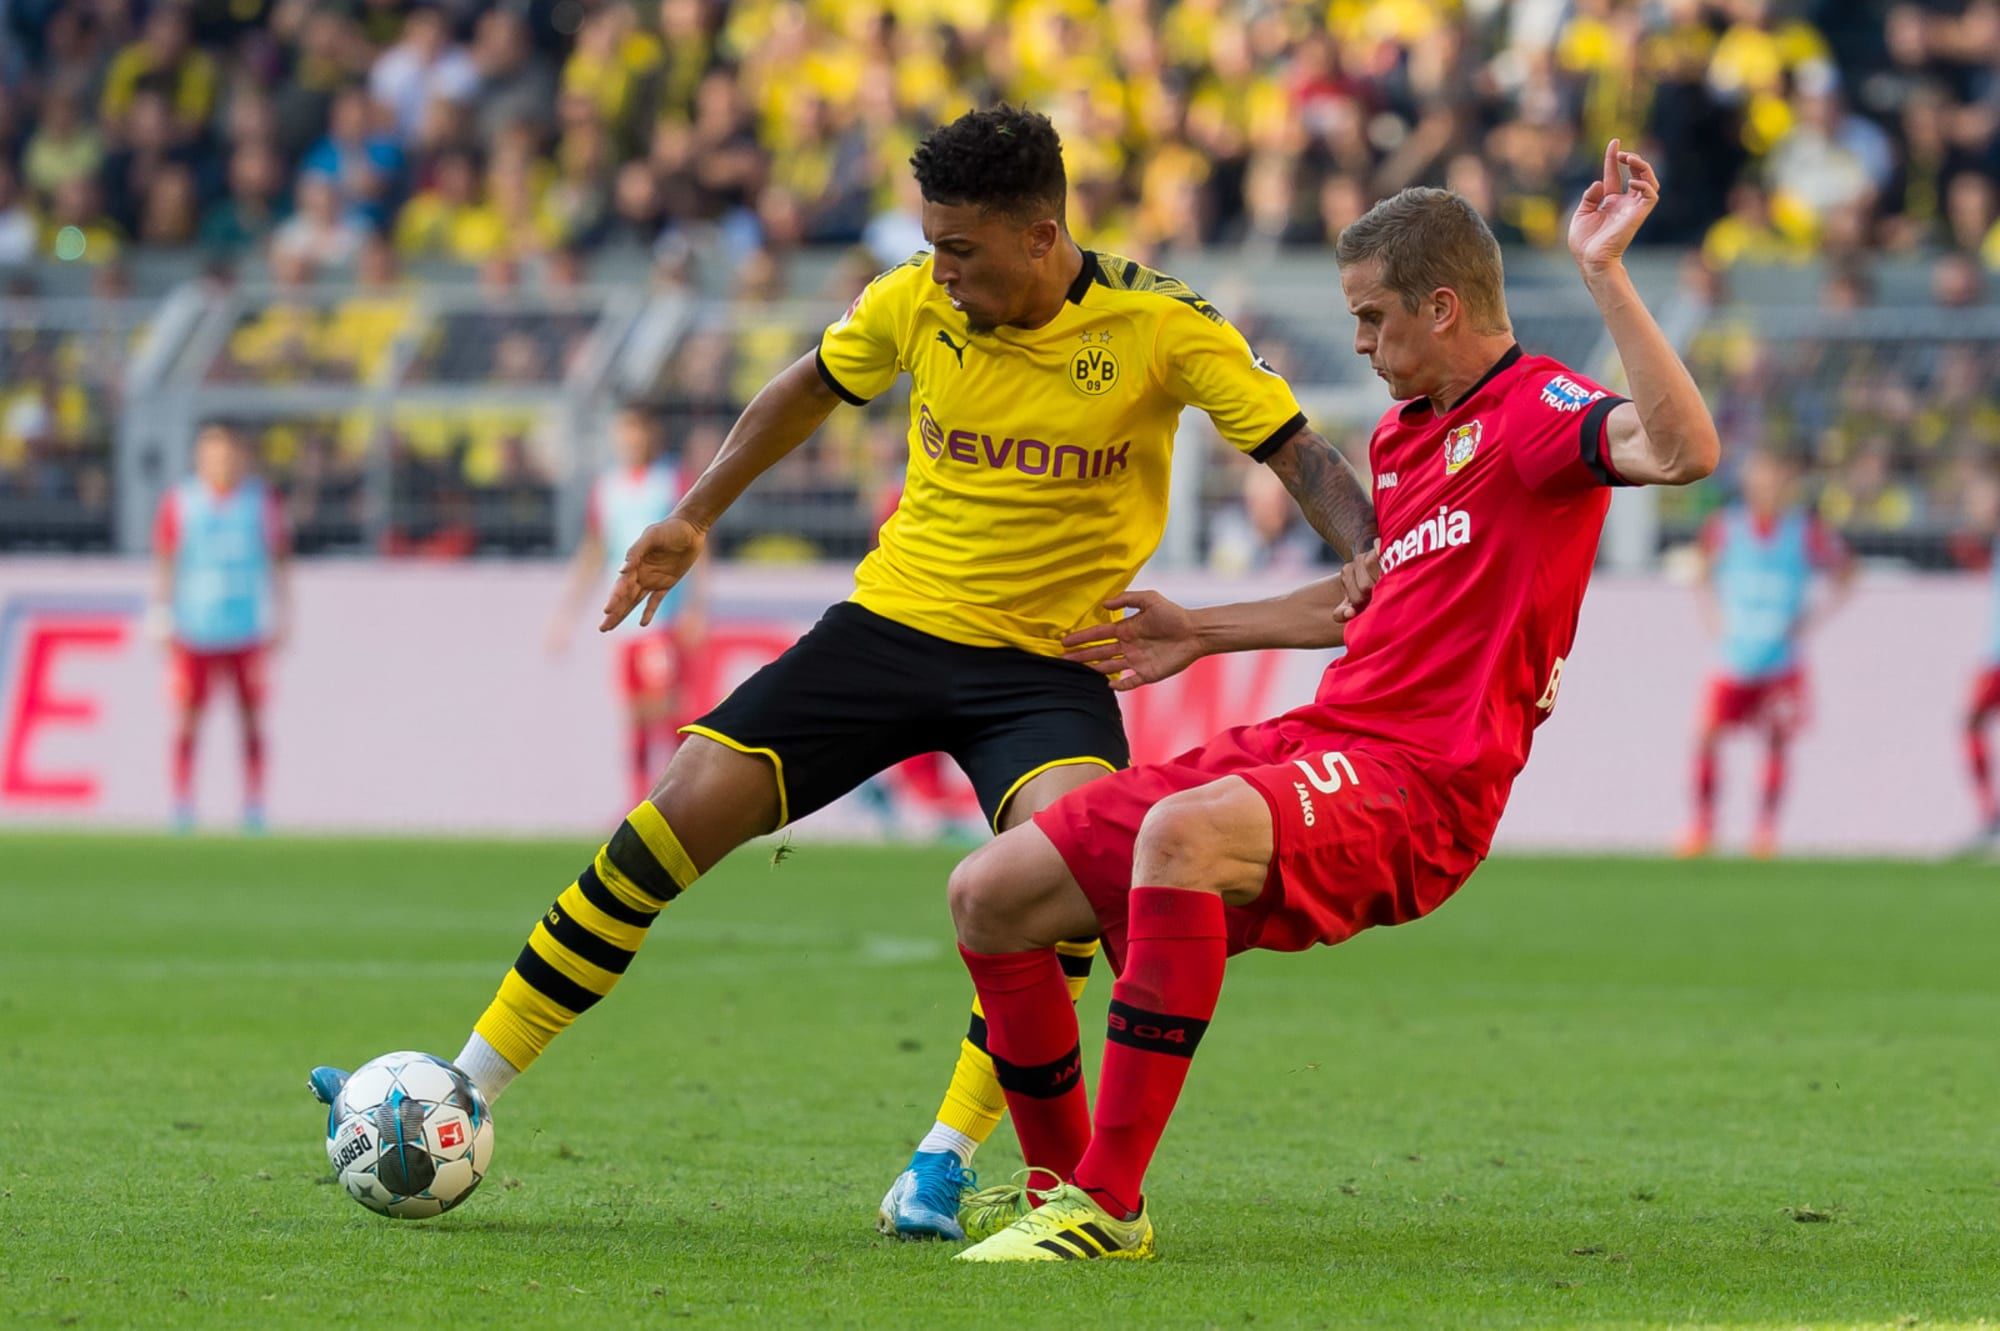 Bundesliga round 4: Bayer Leverkusen vs Borussia Dortmund: Match Preview and Teams Analysis